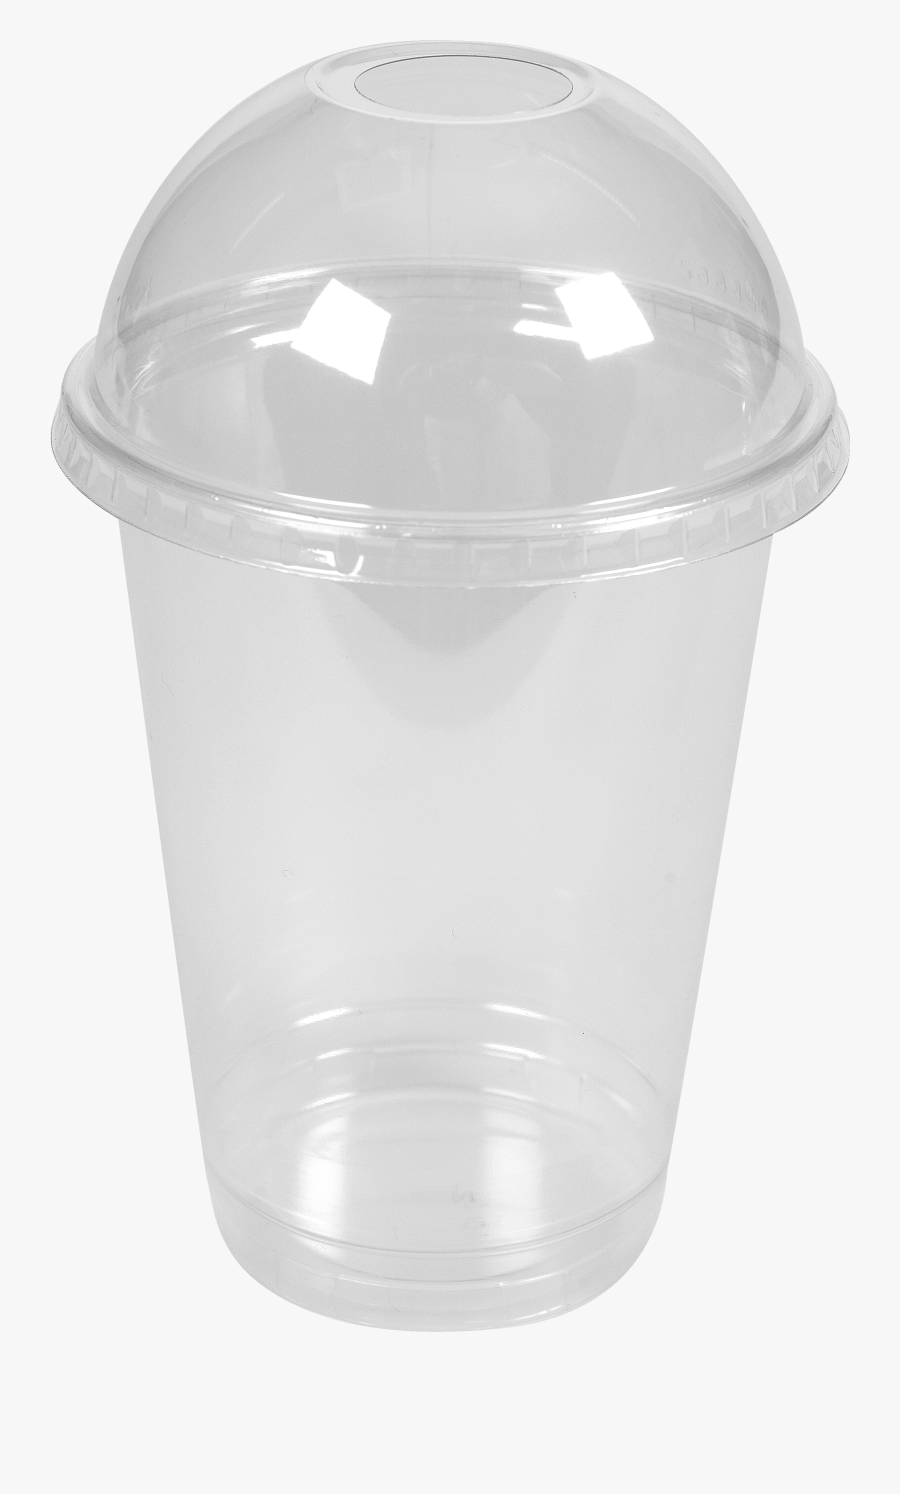 Smoothie Transparent Plastic Cup - Png Plastic Smoothie Cup, Transparent Clipart